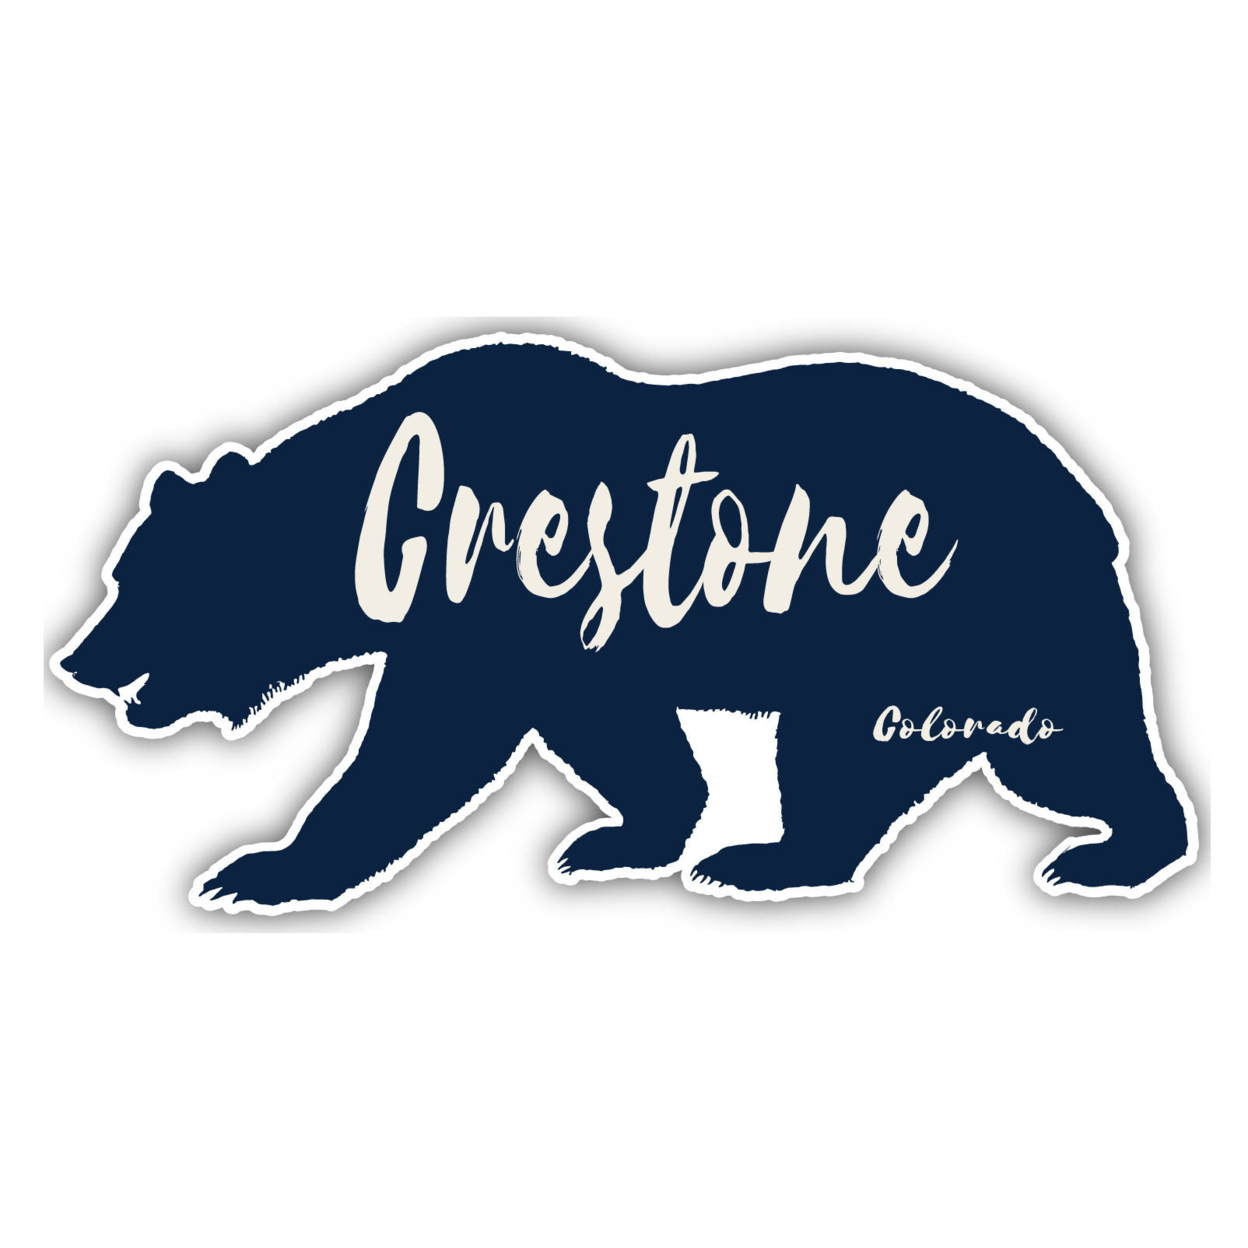 Crestone Colorado Souvenir Decorative Stickers (Choose Theme And Size) - 4-Pack, 8-Inch, Camp Life